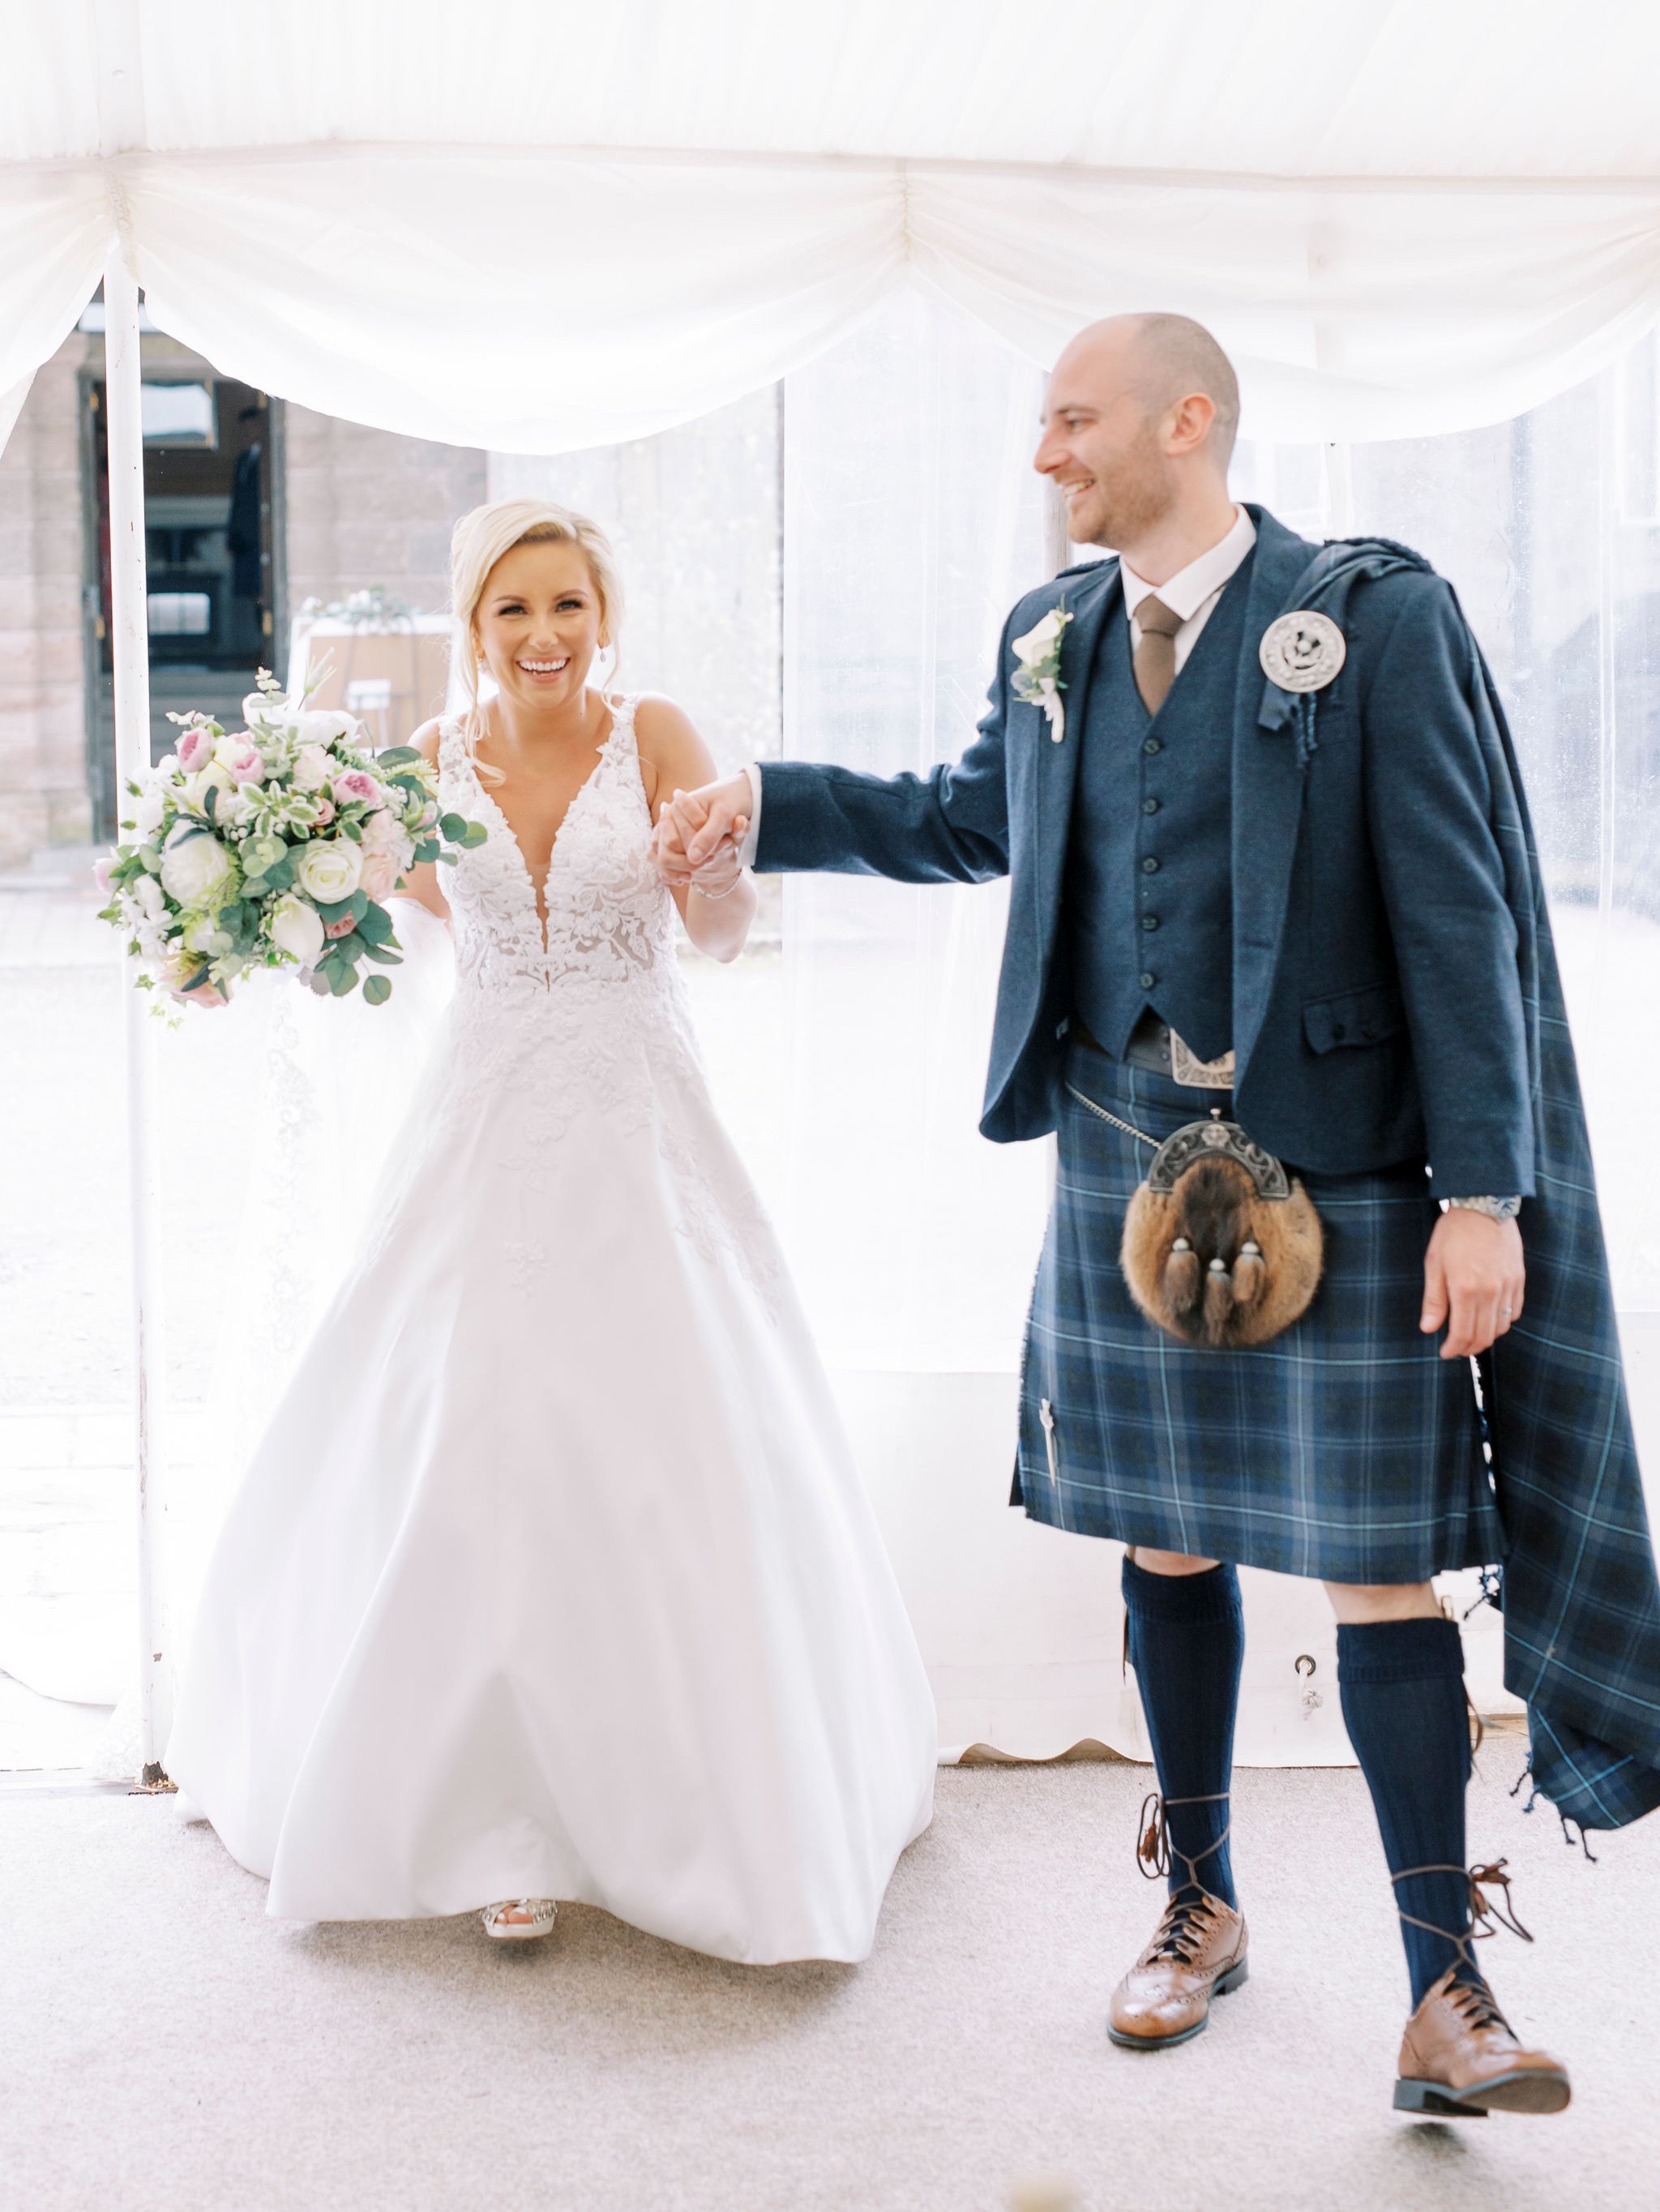 53_springkell-house-wedding-photographer-dumfries-scotland-bride-groom-enter-marquee.jpg